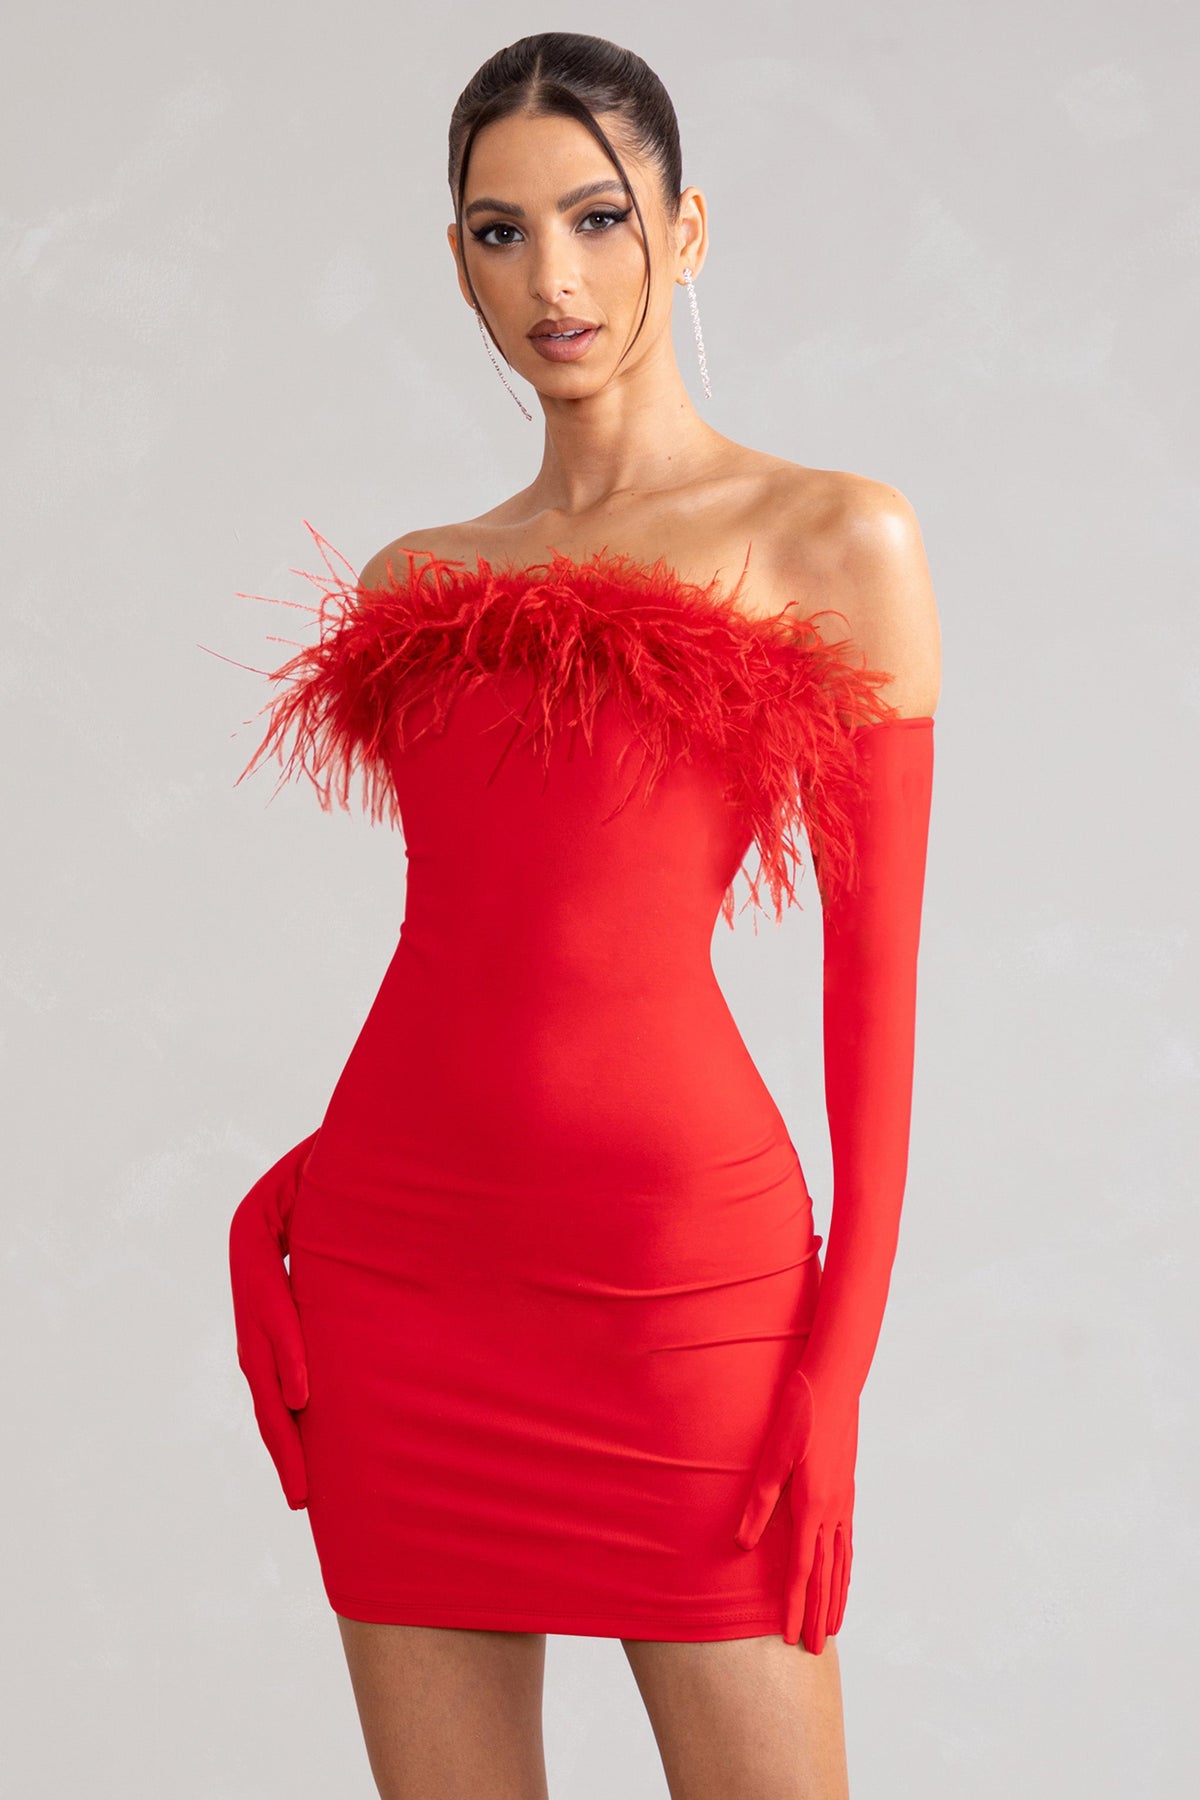 Sofía Vergara's Sexy Red Dress Bodycon Dress